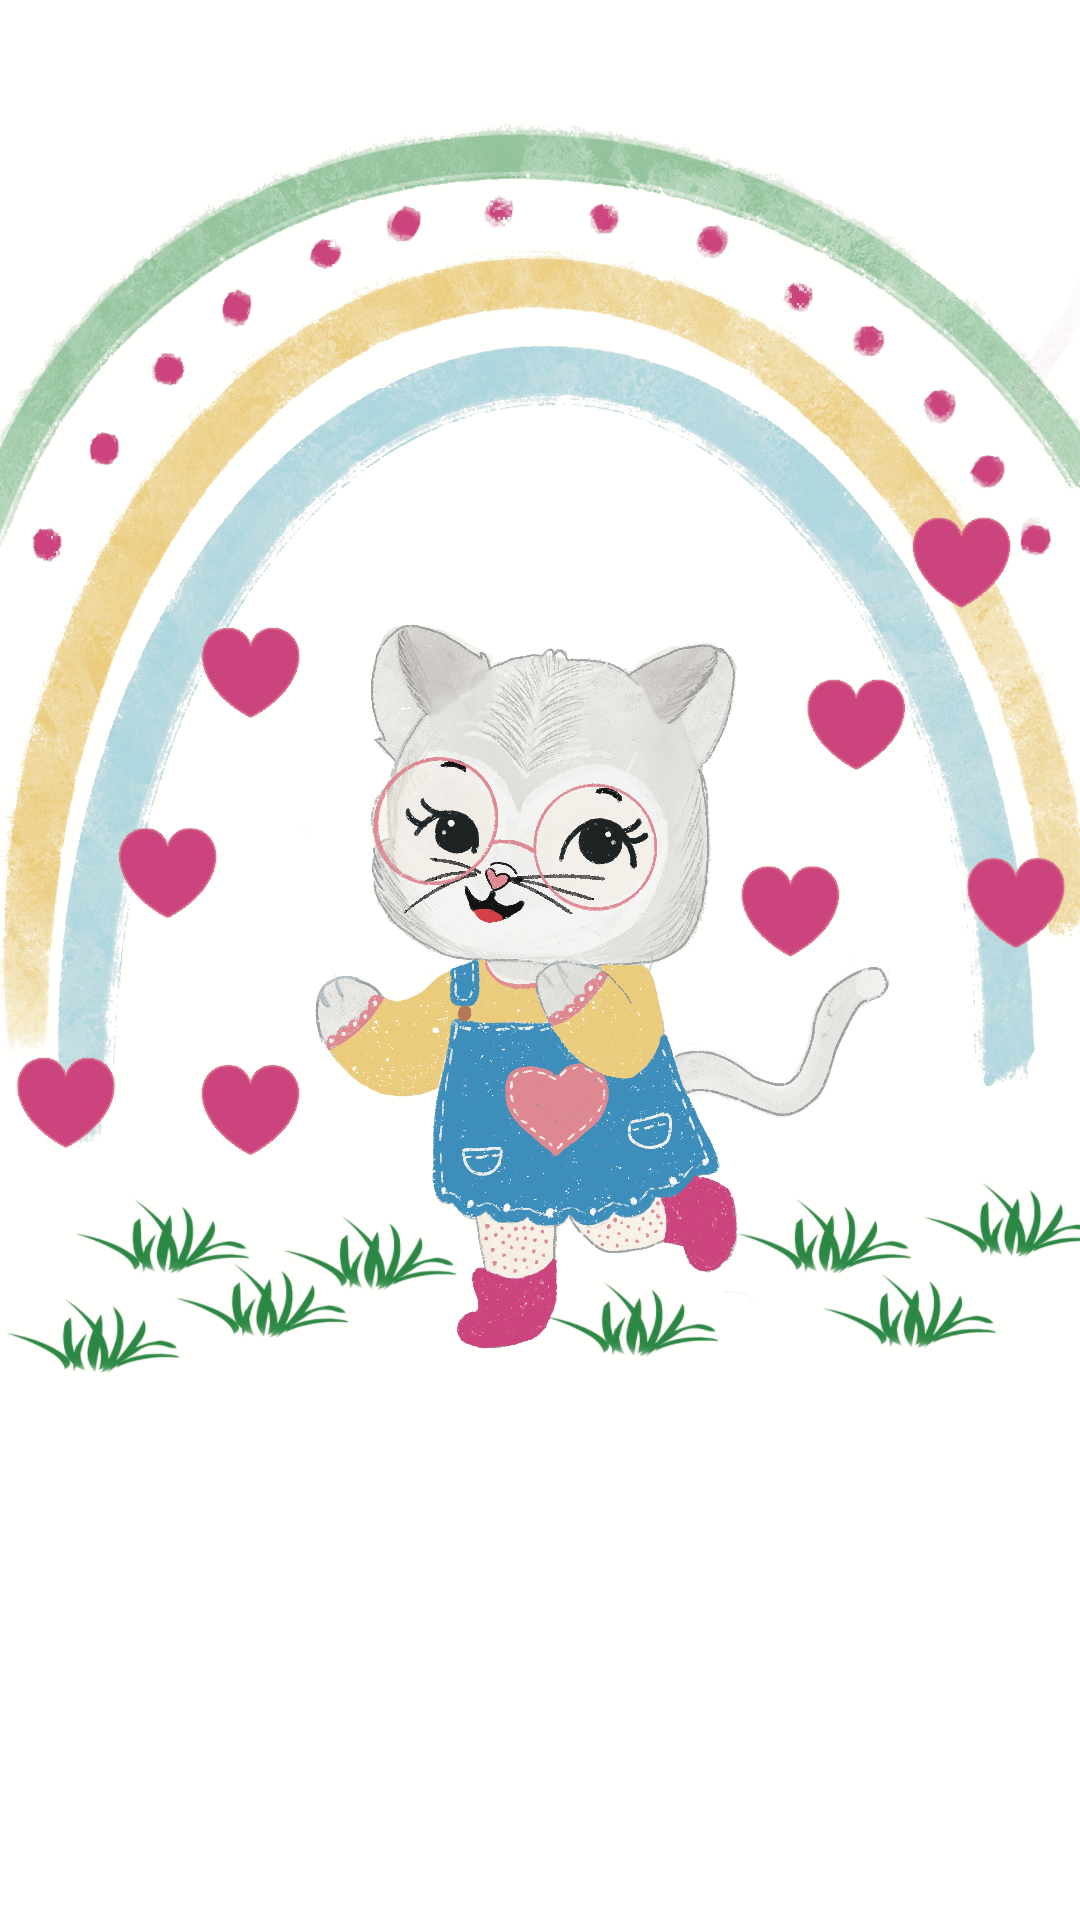 Little cute cat illustration